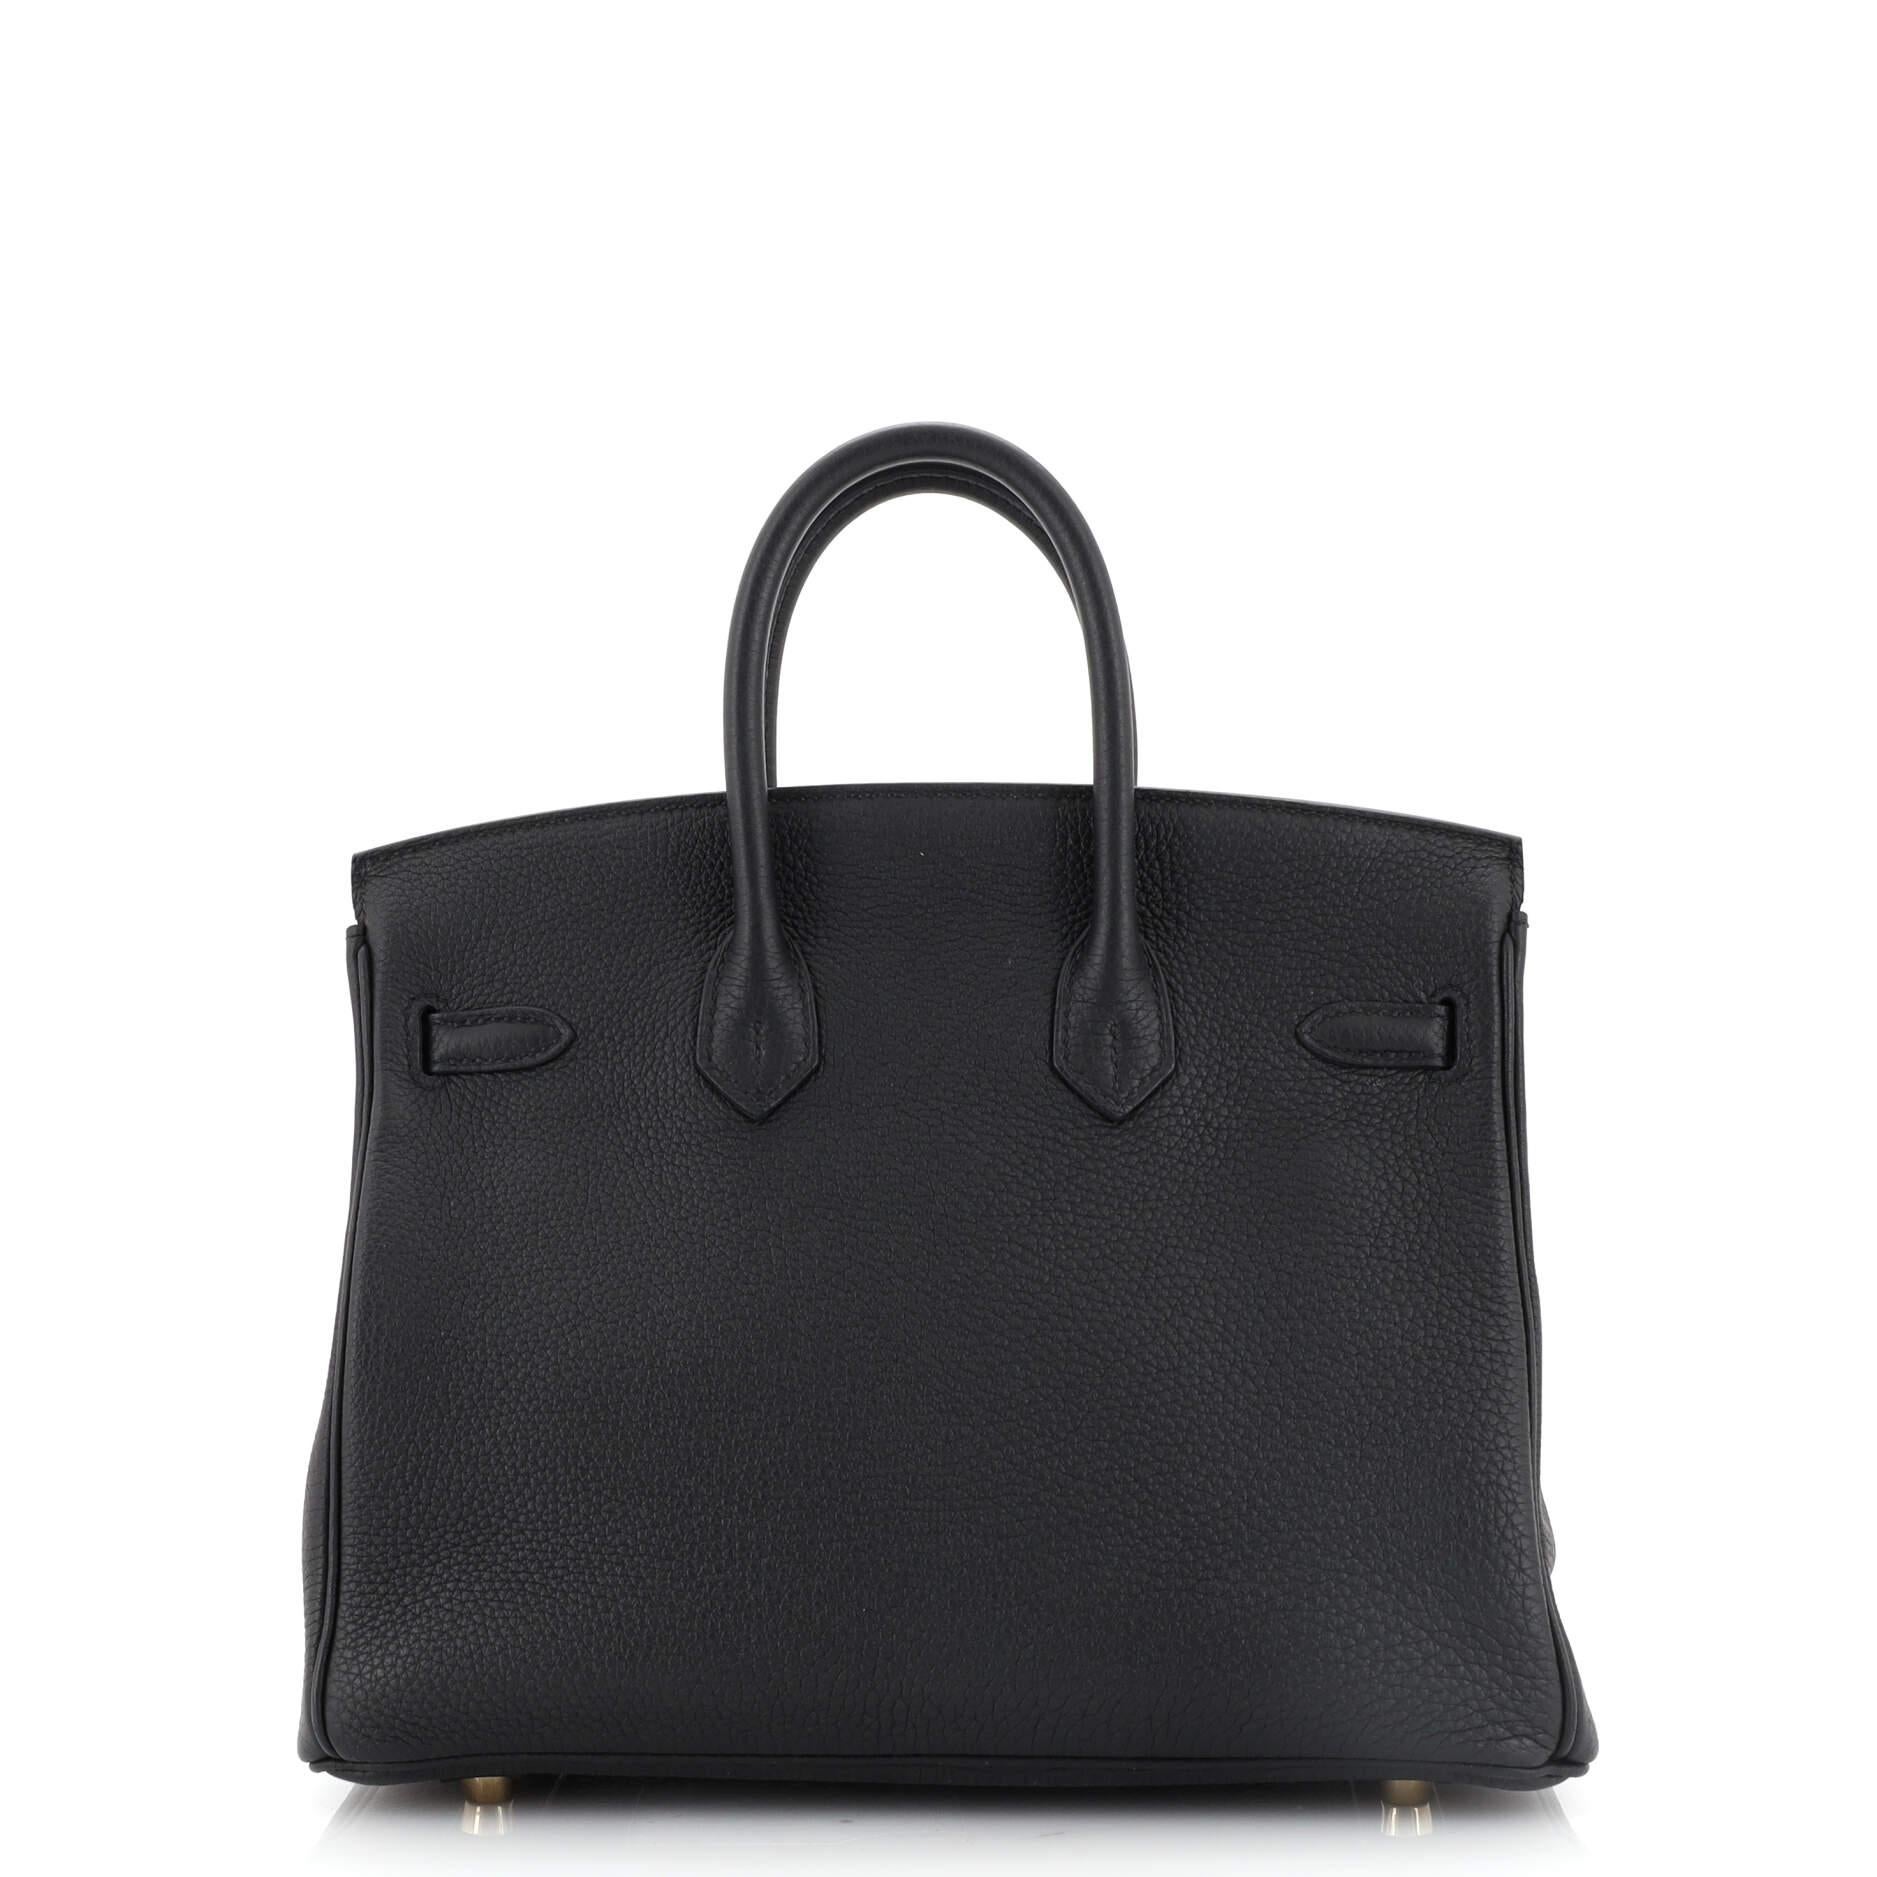 Women's or Men's Hermes Birkin Handbag Black Togo with Gold Hardware 25